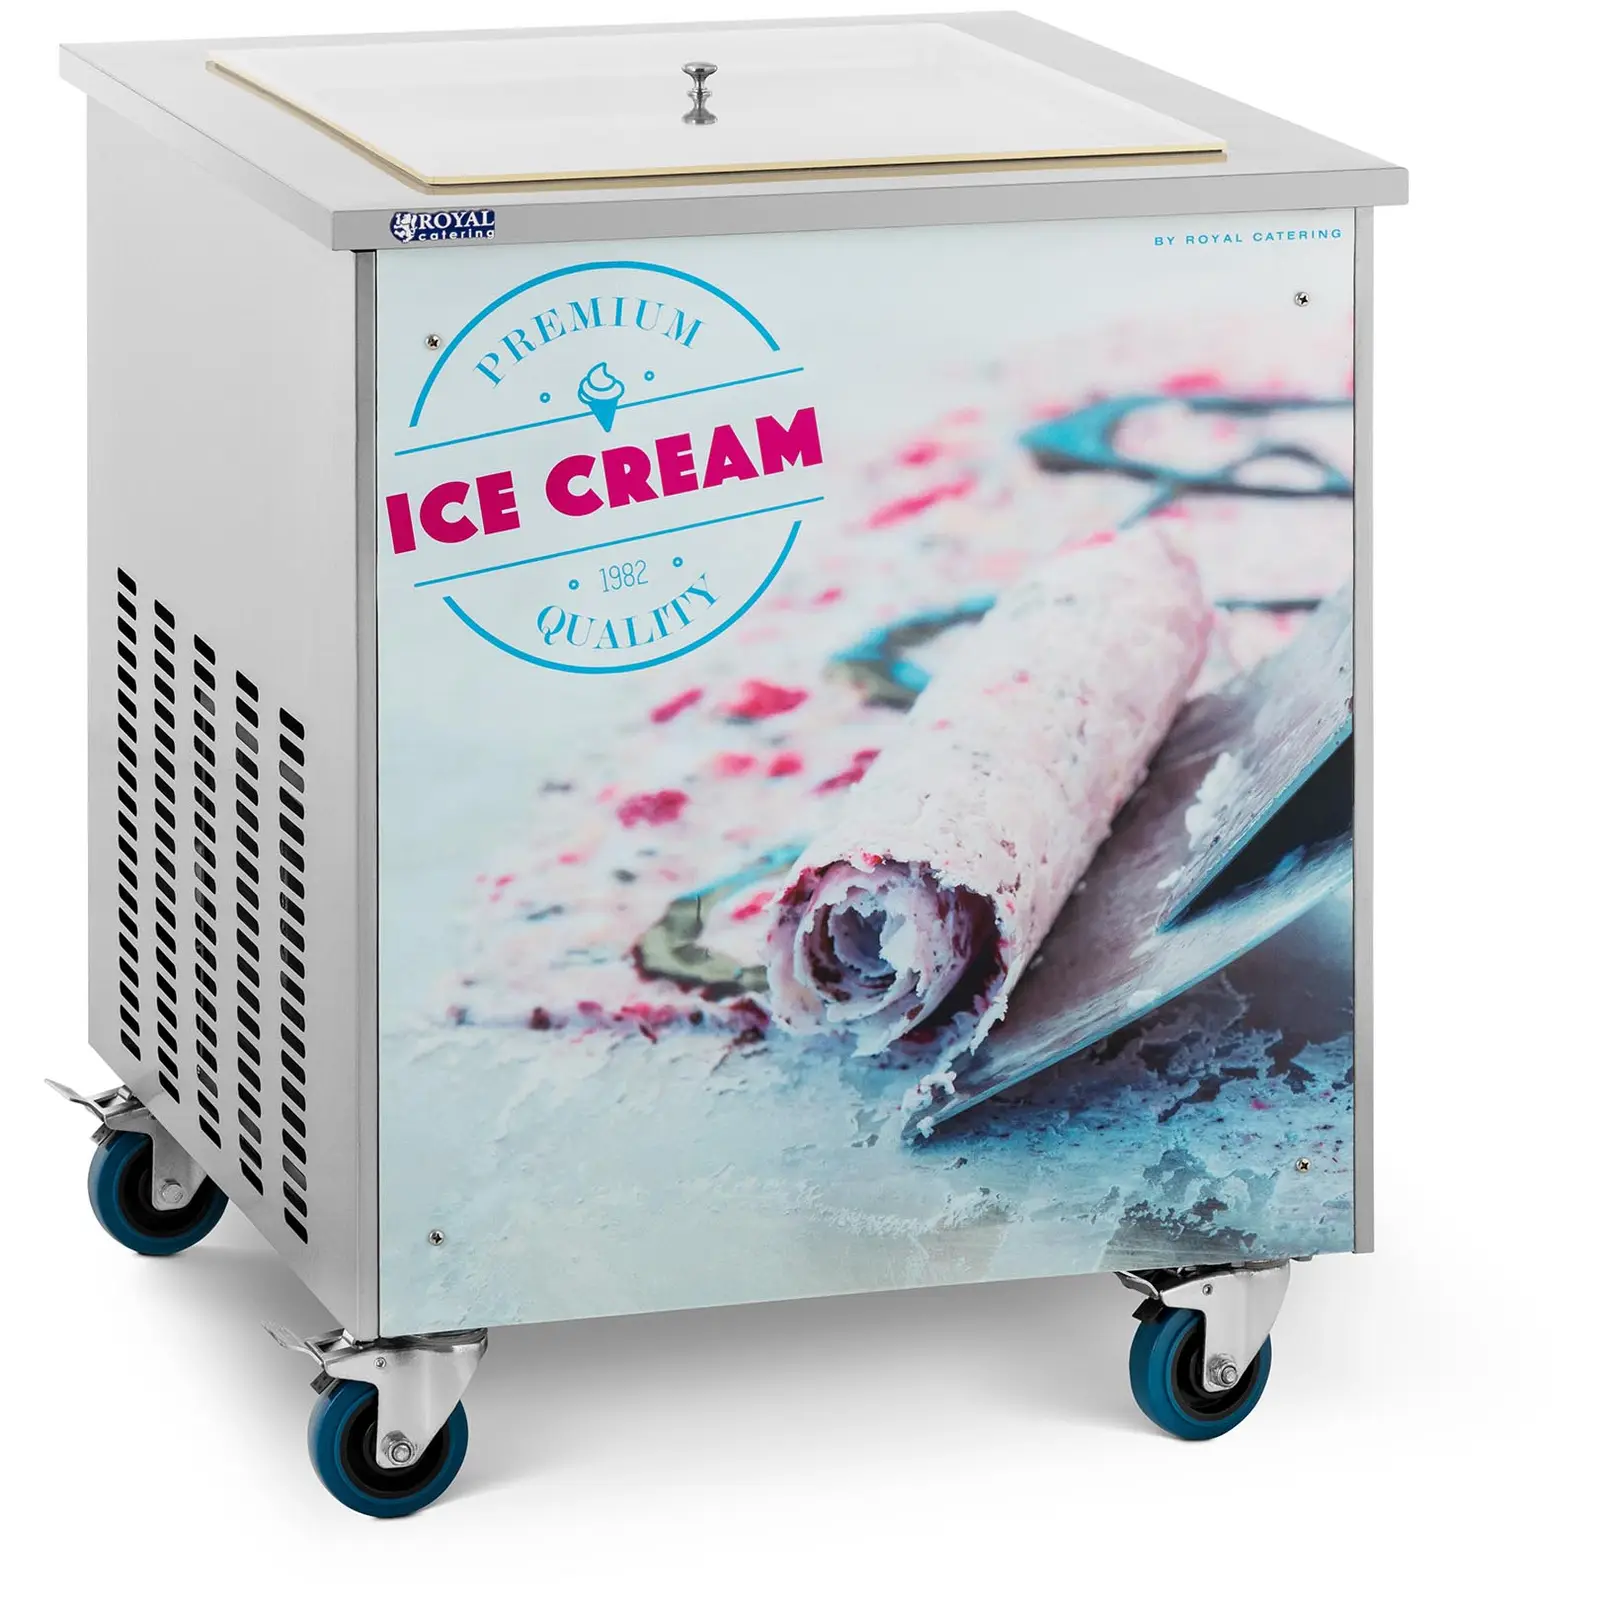 Stroj na rolovanou zmrzlinu - 50 x 50 x 2,5 cm - Royal Catering